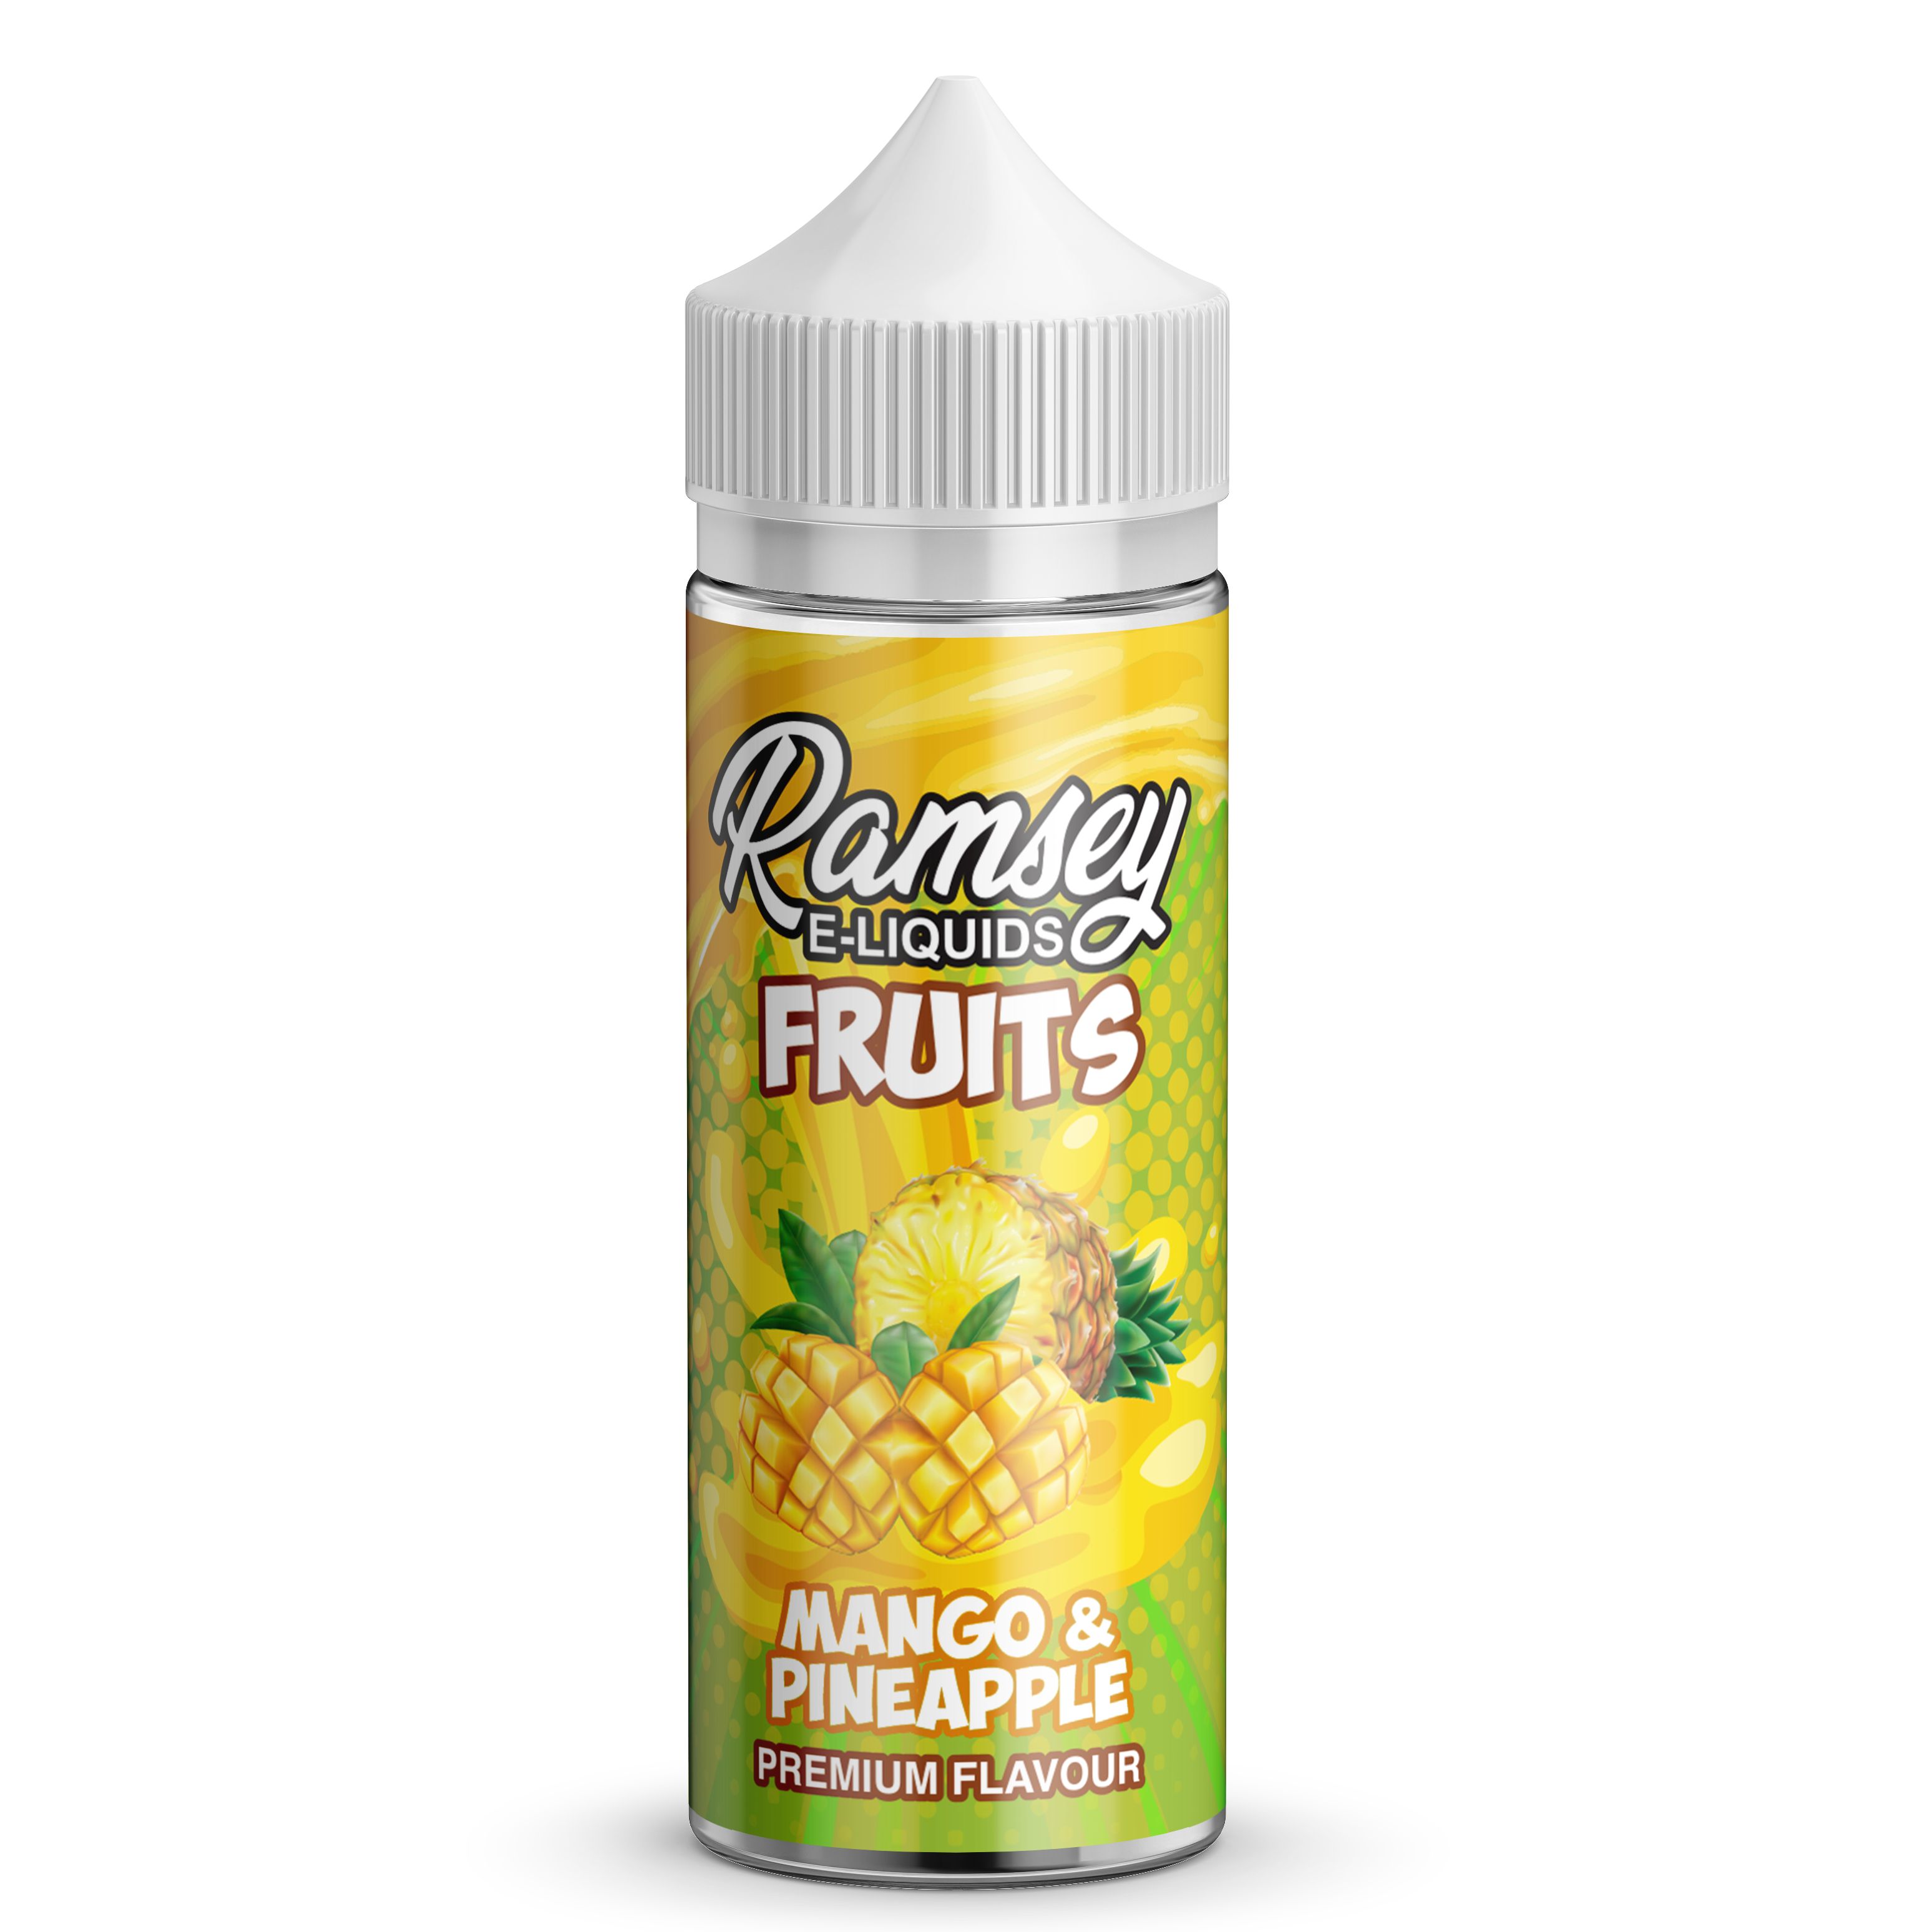 Ramsey E-Liquids Fruits Mango & Pineapple 0mg 100ml Shortfill E-Liquid